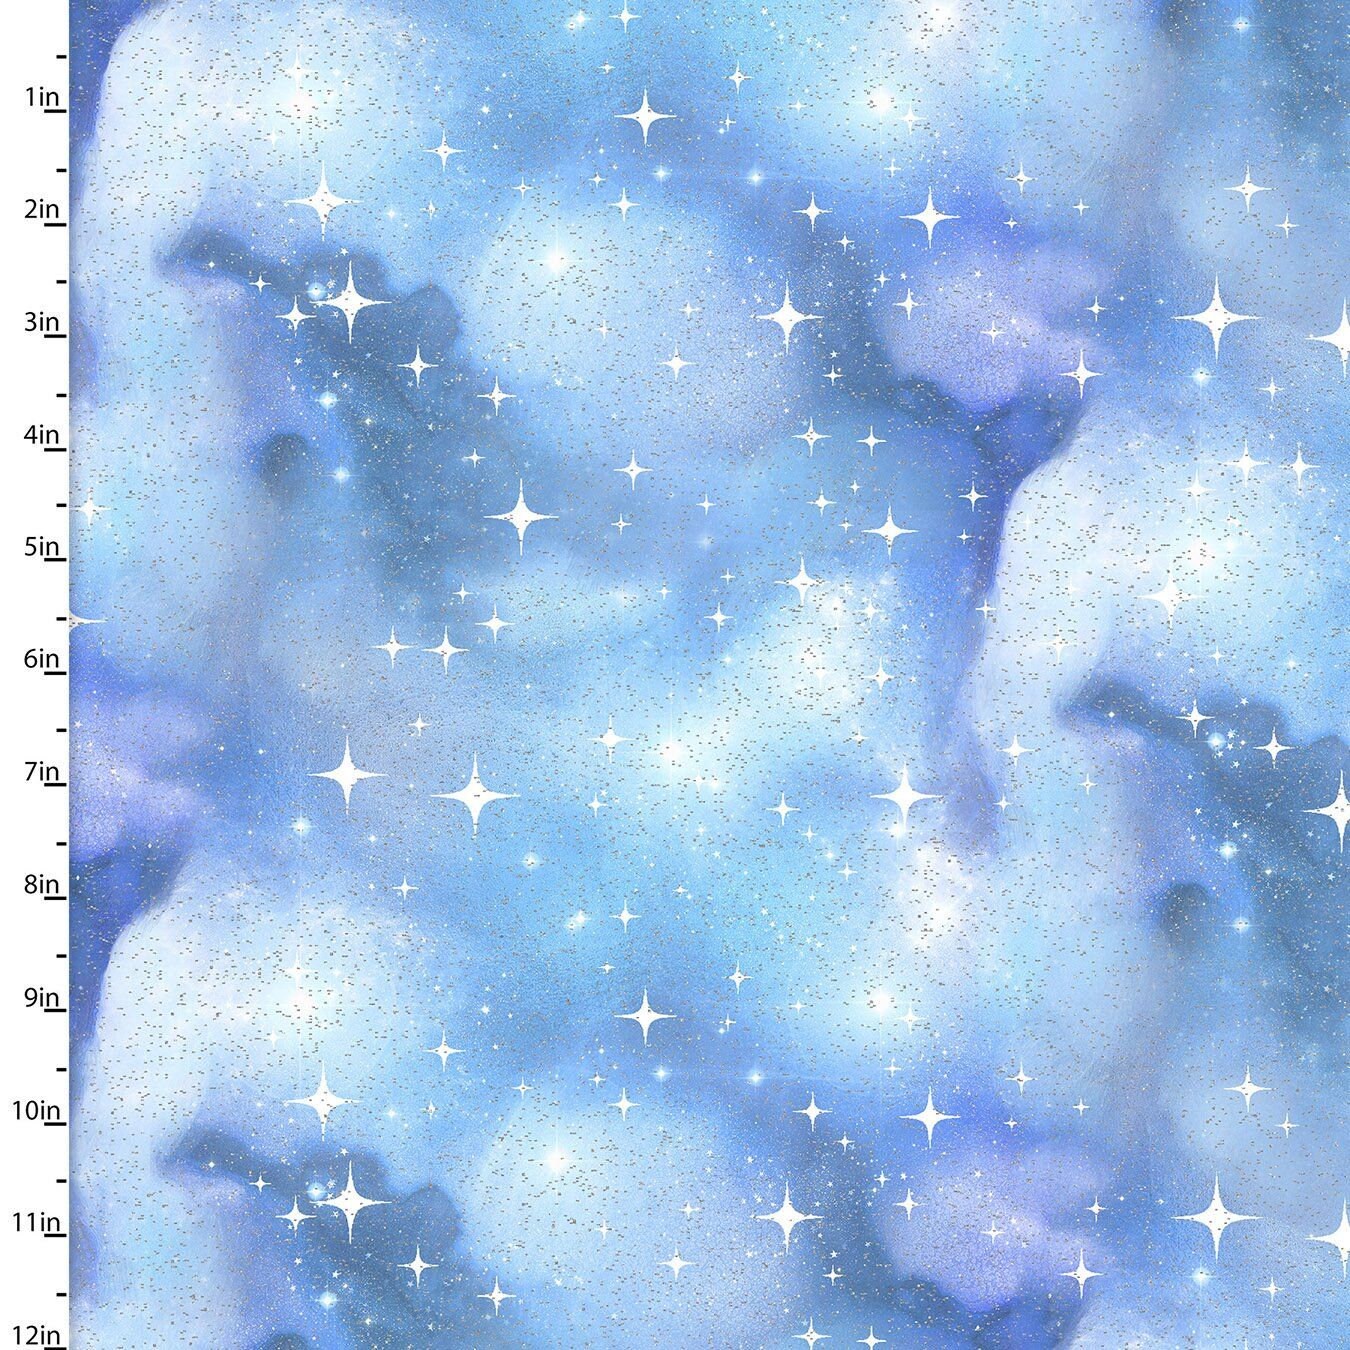 Magical Galaxy Civil Turquoise w/Glitter 17169-BLU Cotton Woven Fabric